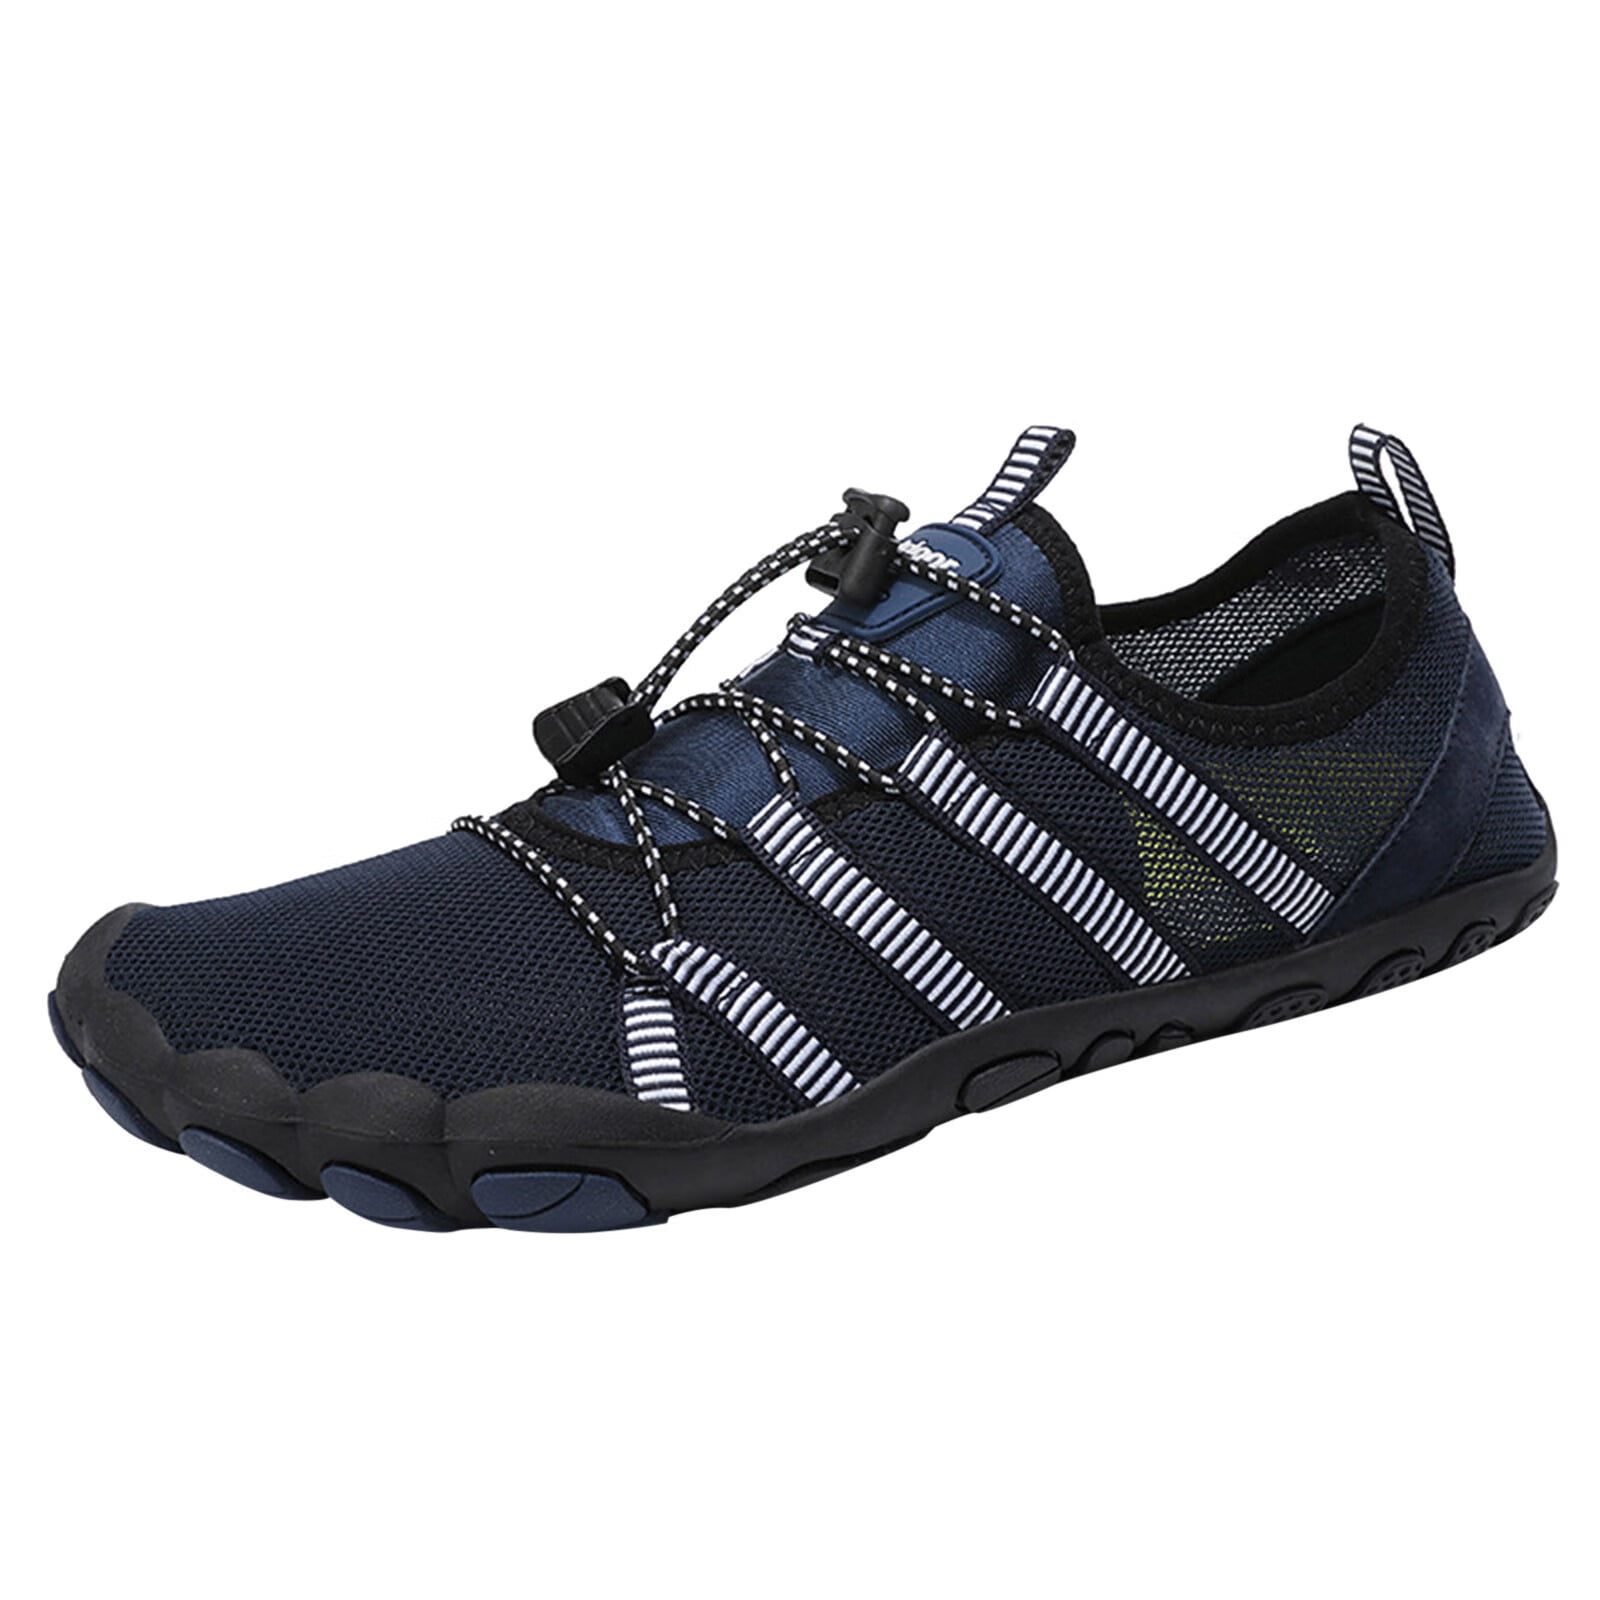 Adidas Stan Smith Slip-On Shoes